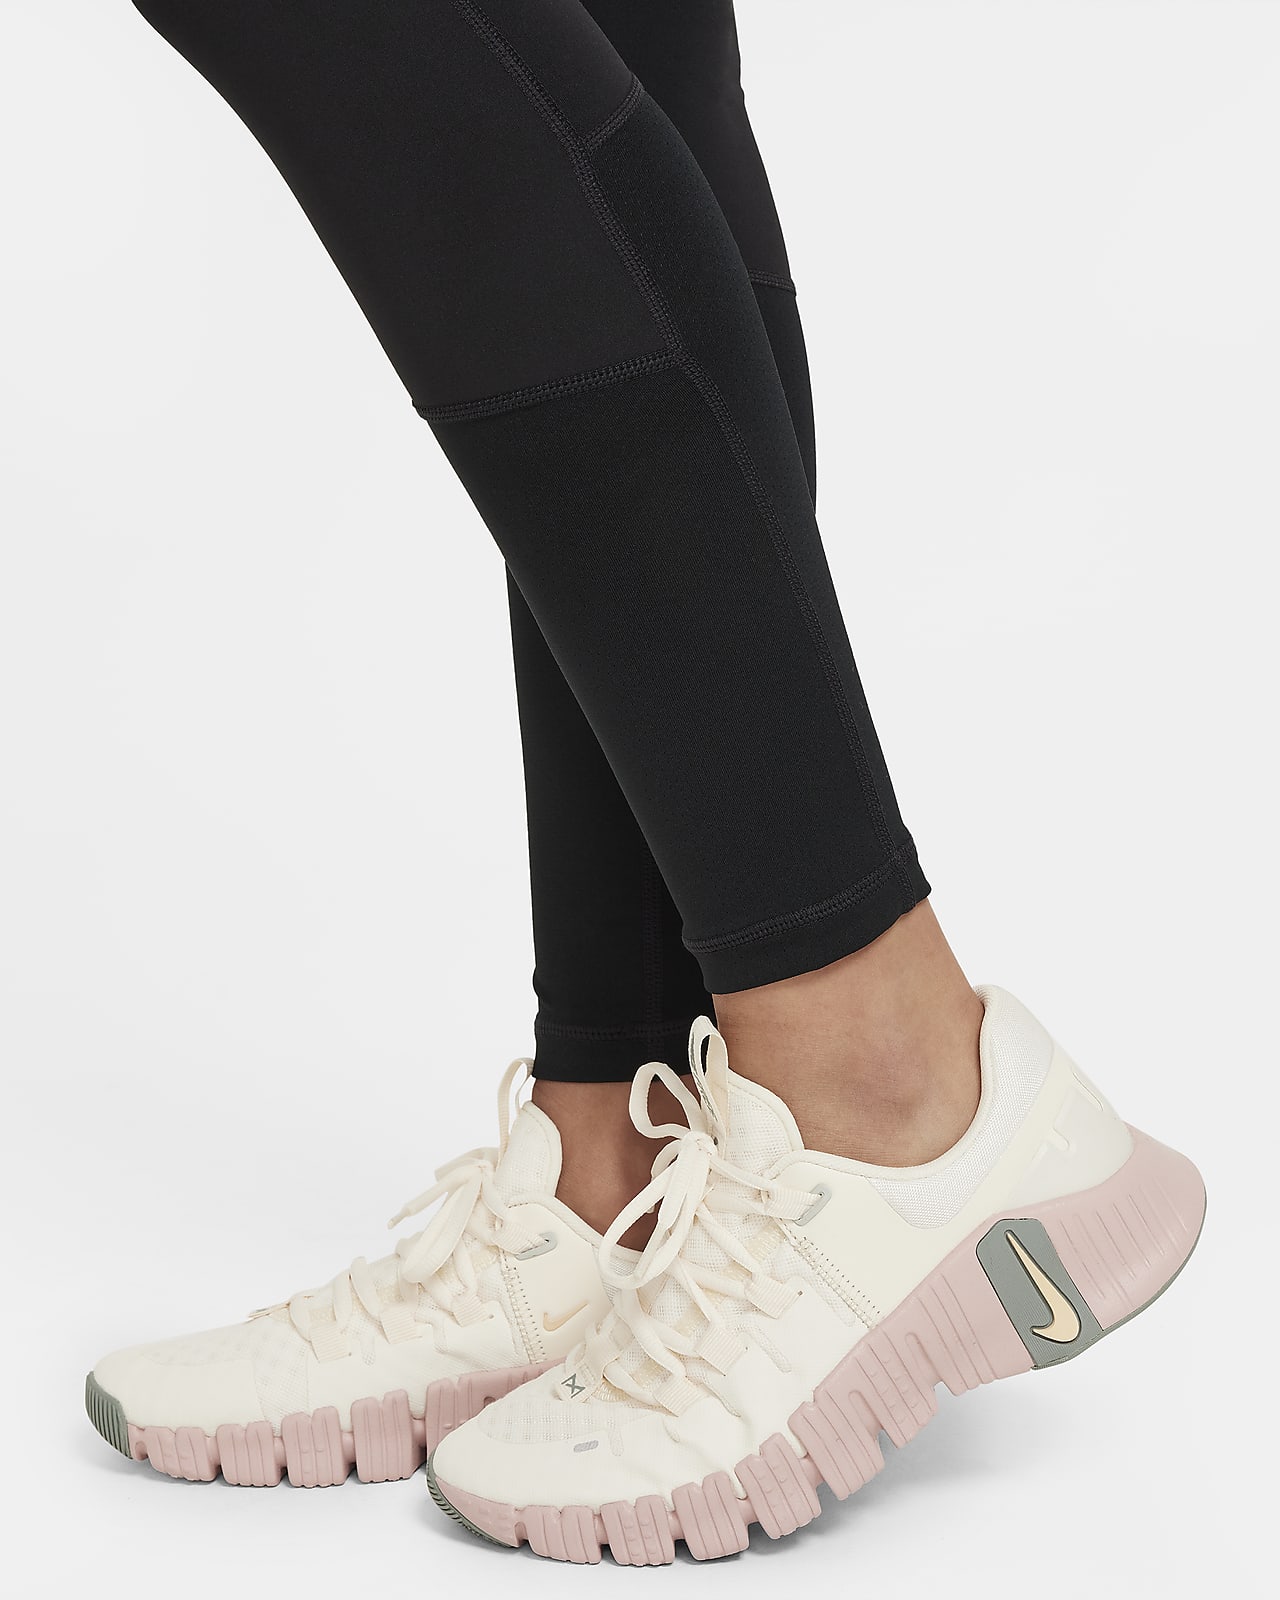 Leggings Nike Pro Dri-FIT – Bambina/Ragazza